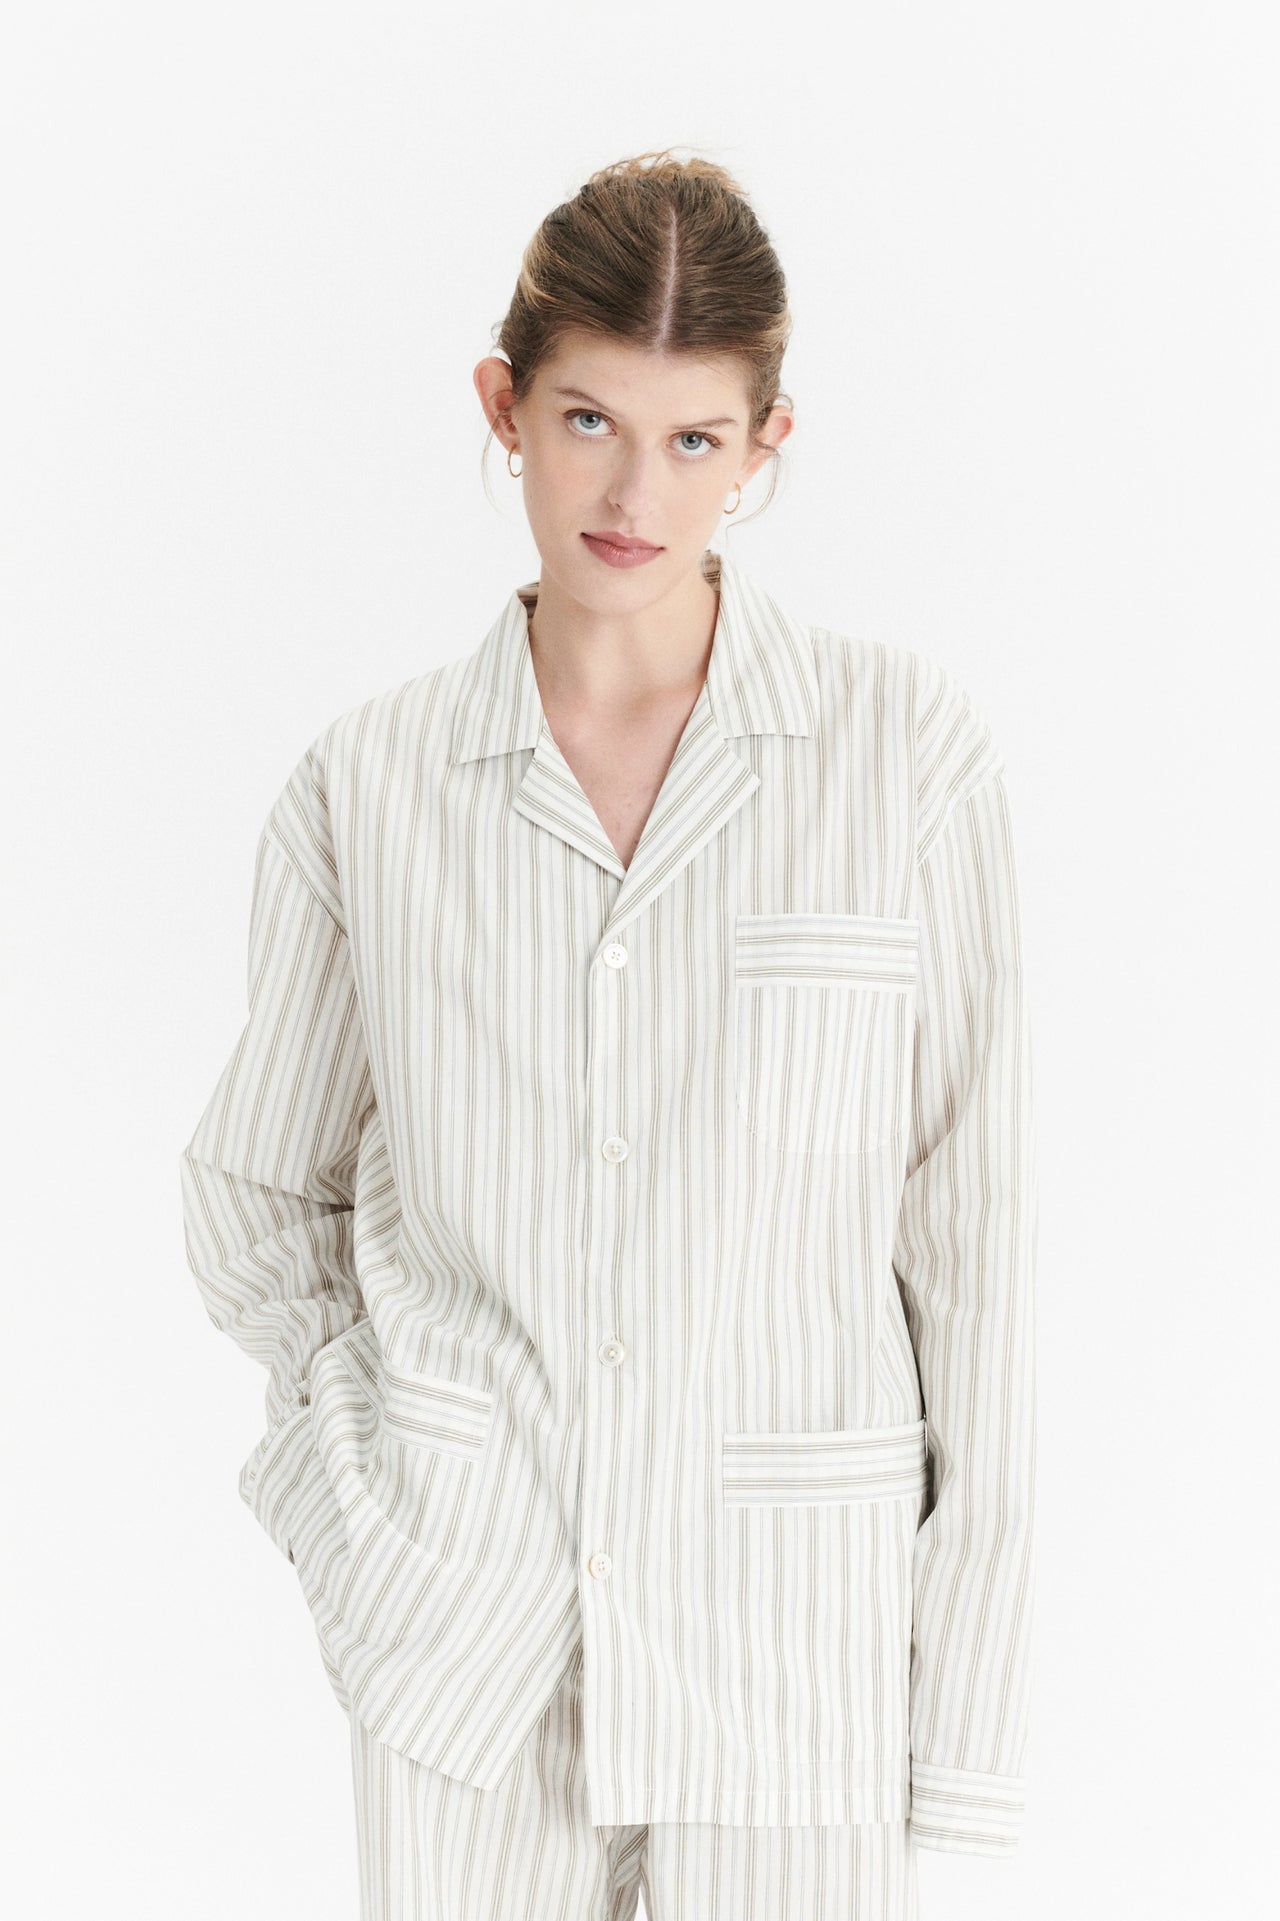 Unisex Pyjama Shirt in a Cream and Beige Striped Excellent Italian Cotton